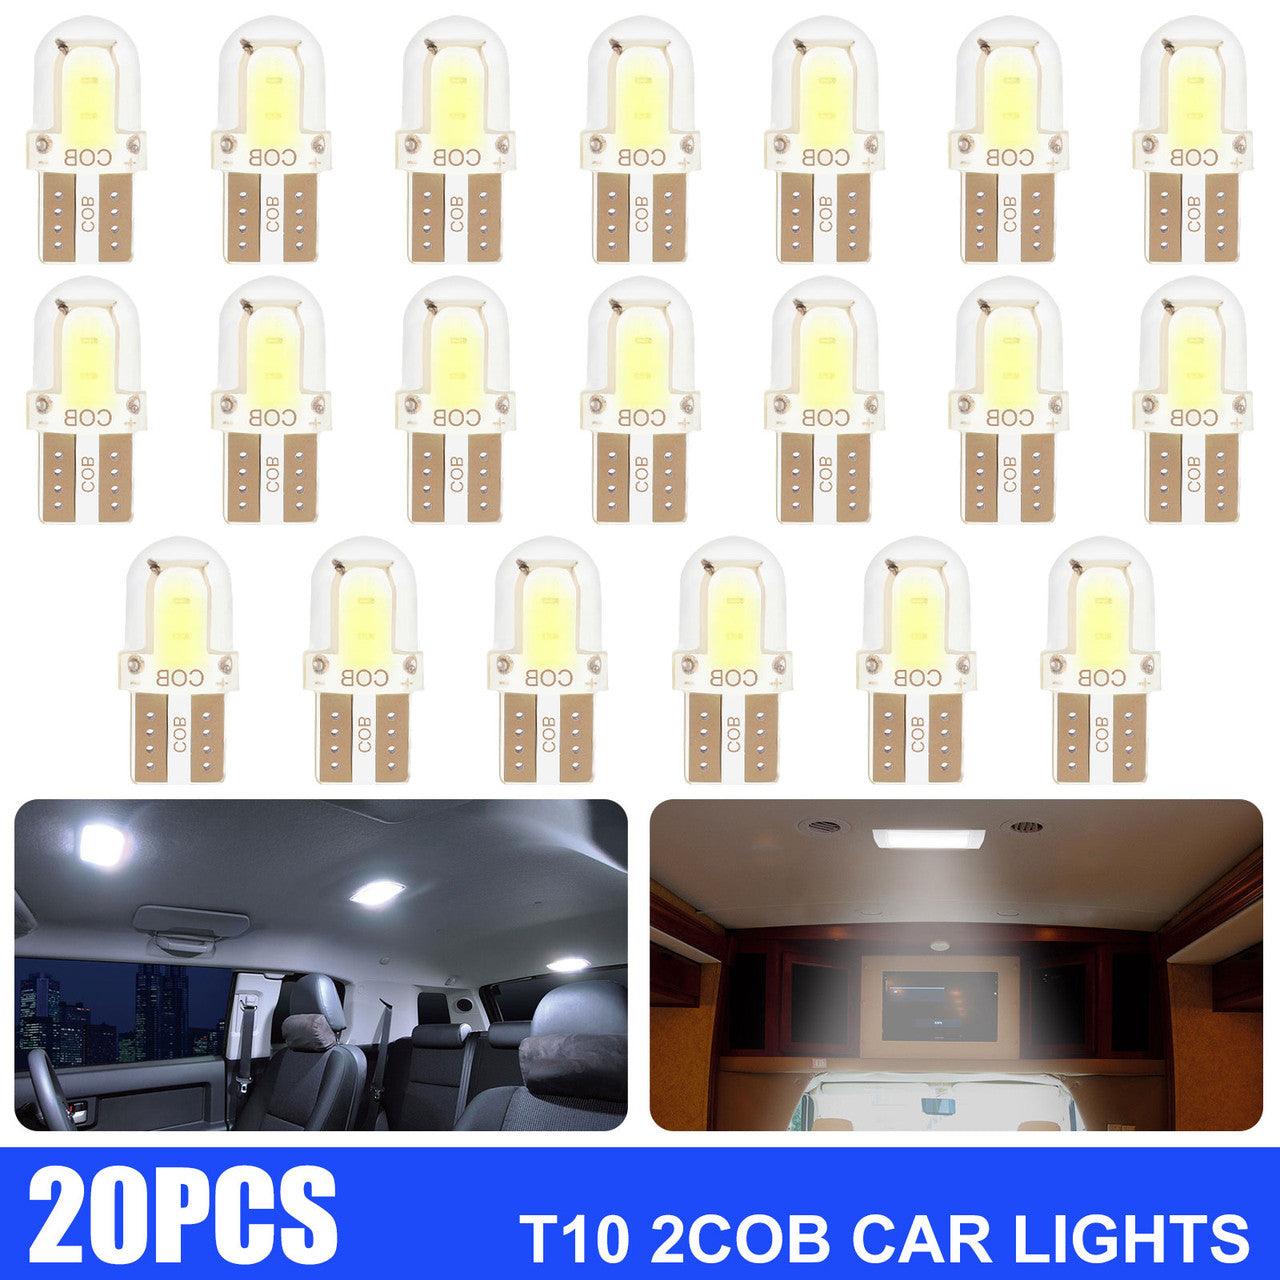 20Pcs T10 194 LED Bulbs Super Bright, T10 Wedge 194 168 158 W5W LED Bulbs, 2COB Chipset LED Bulbs for License Plate Lights Interior Map Dome Side Marker Courtesy Cargo Lights, 6000K Xenon White, 12V